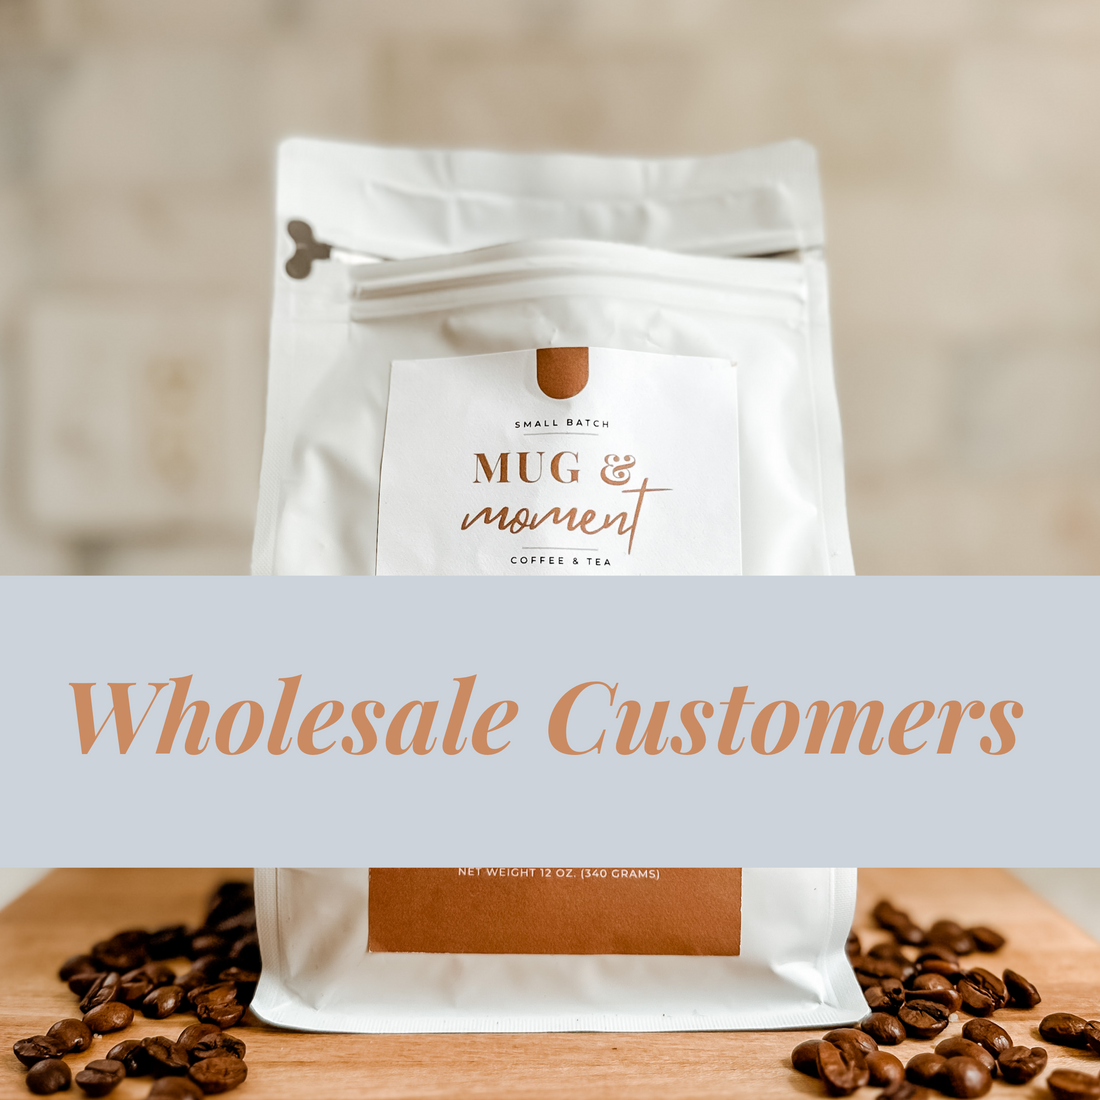 Wholesale Customers Only - Mug & Moment Coffee